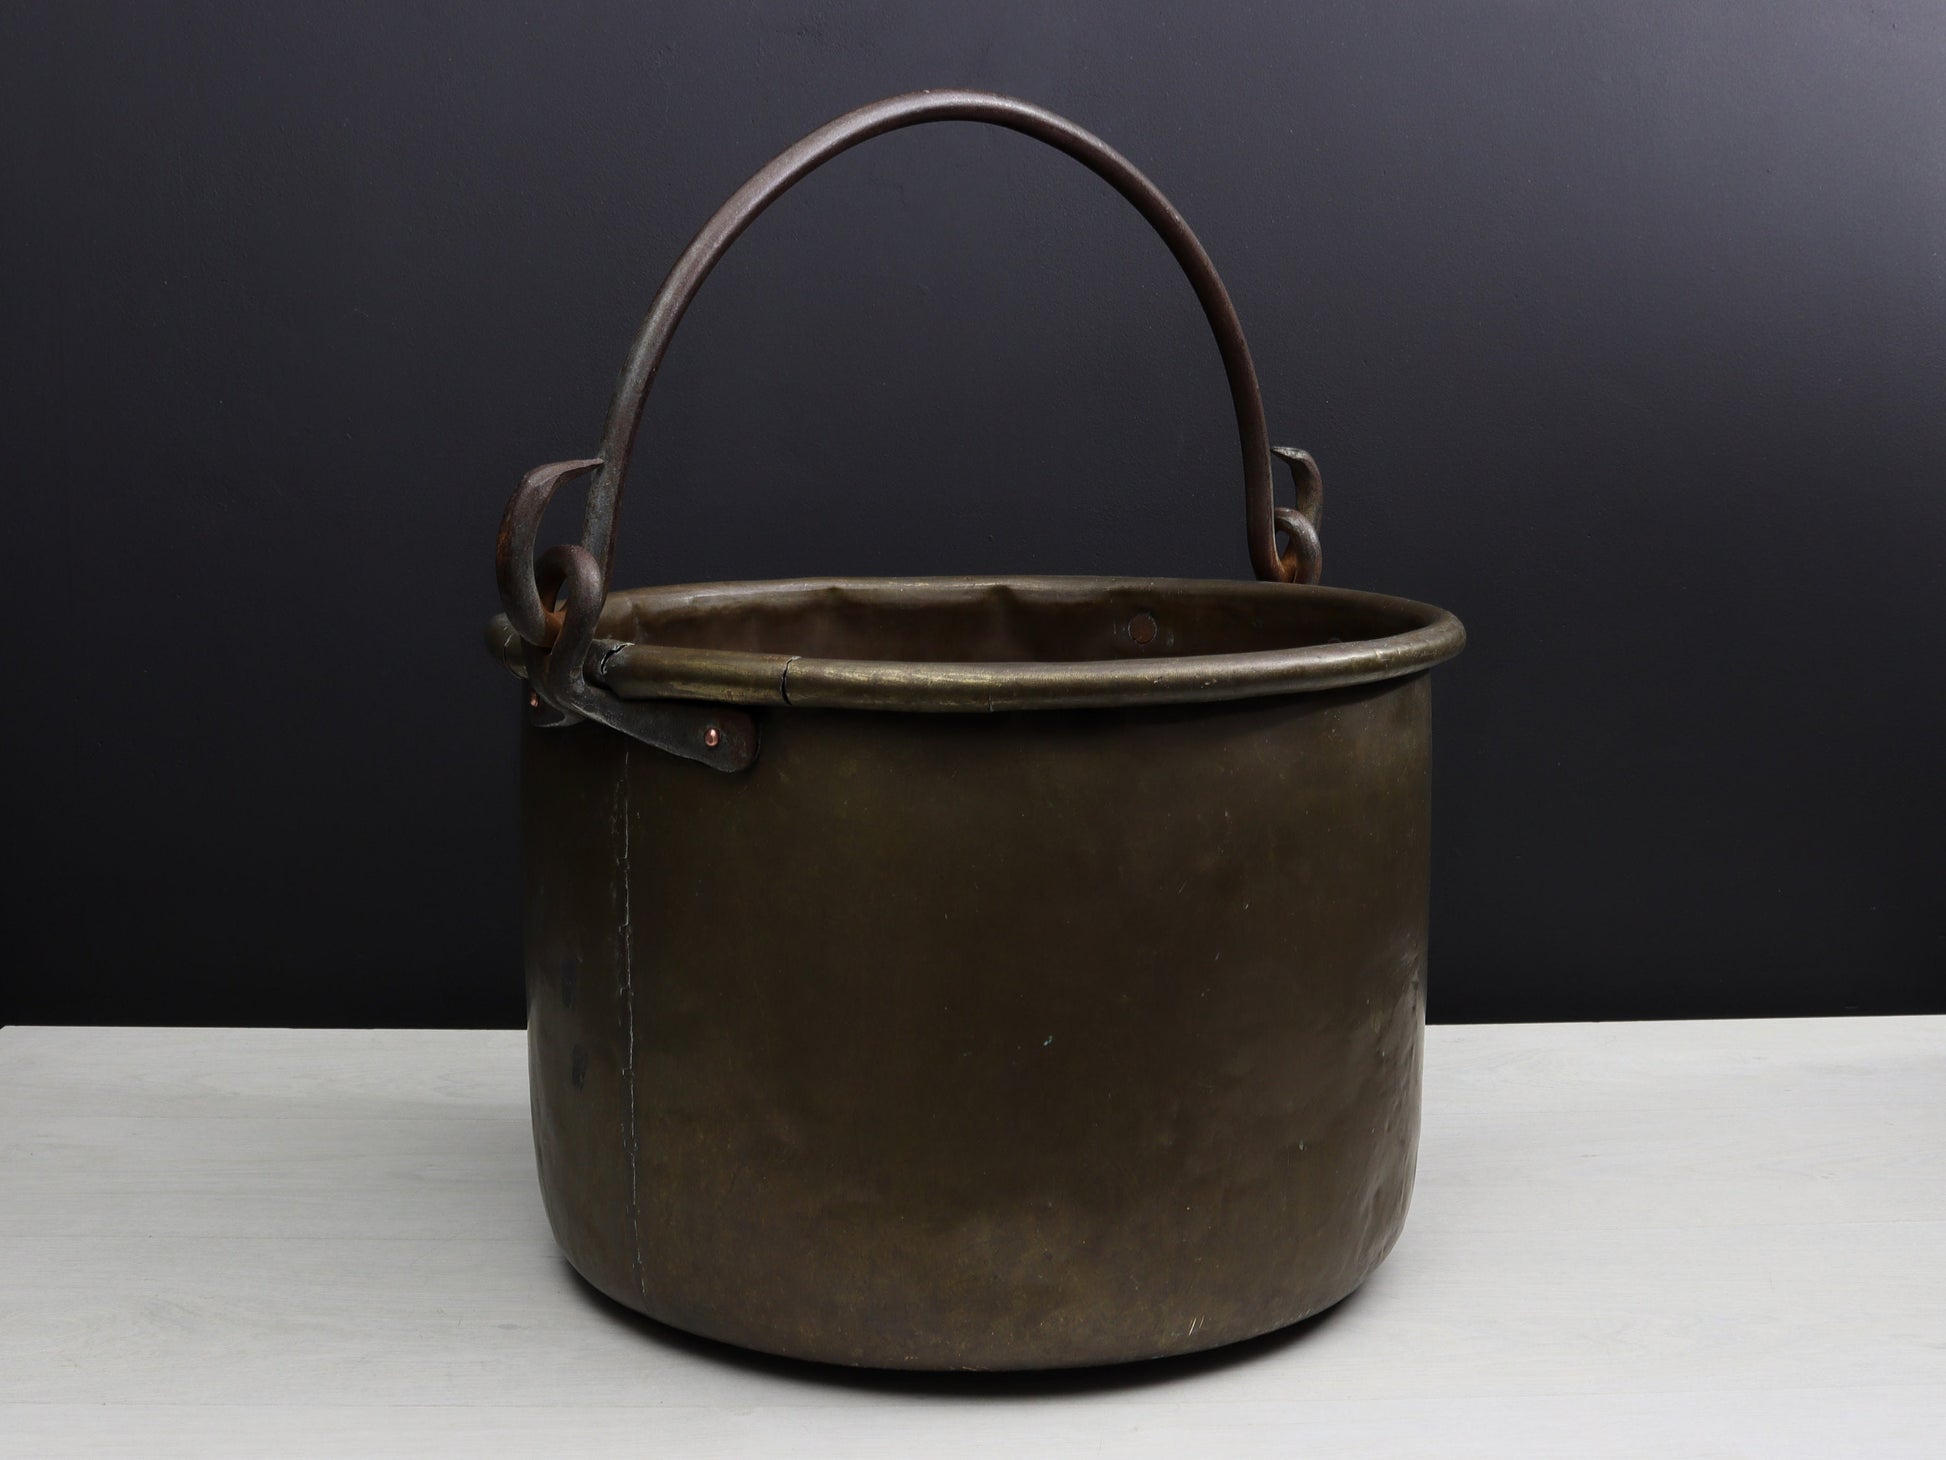 Brass Cauldron-Firewood Holder | Fireplace Decor | Copper Cauldron-Log Holder| Vintage Home Decor